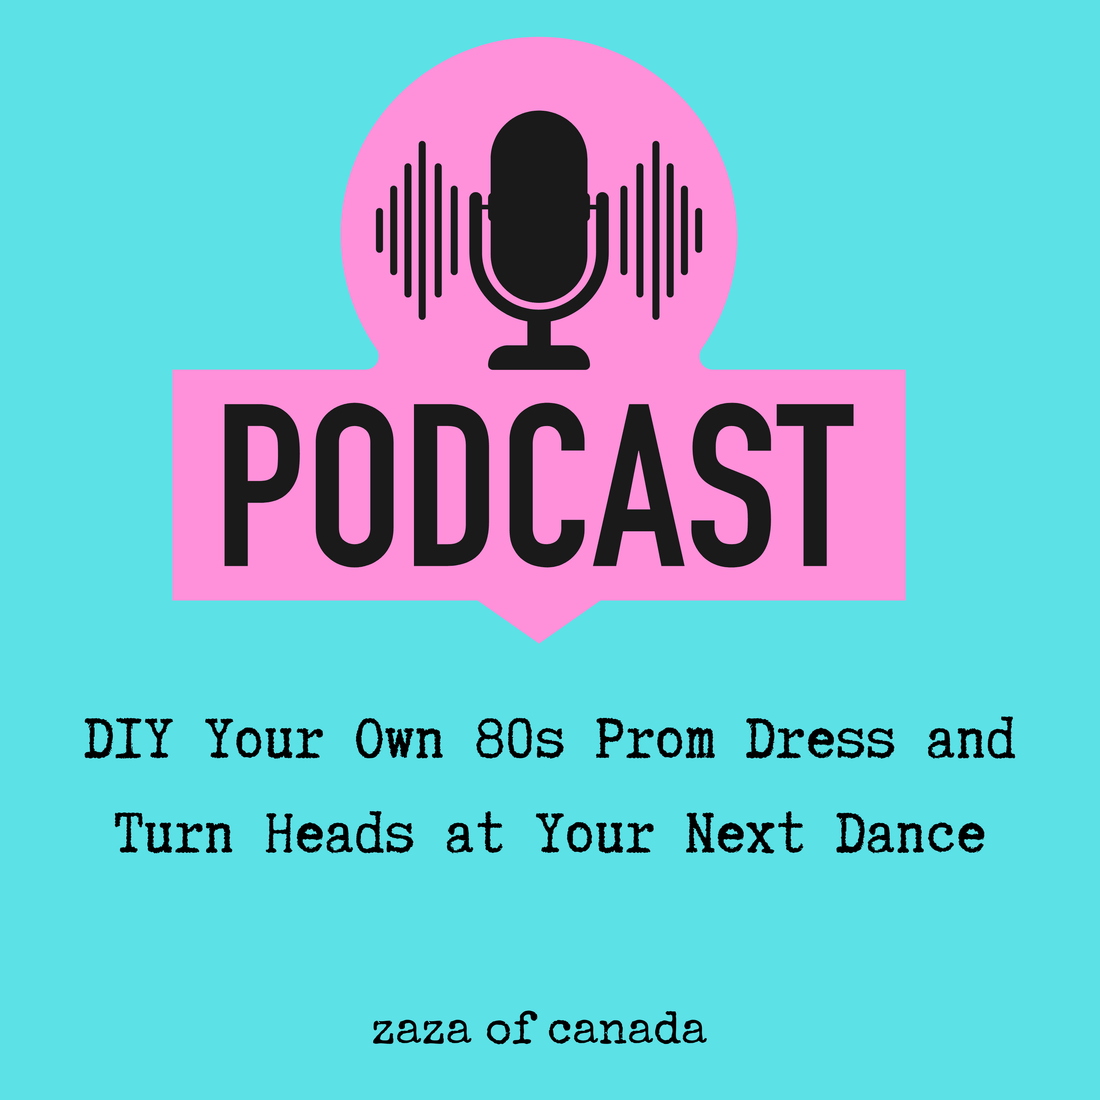 80s prom dress DIY